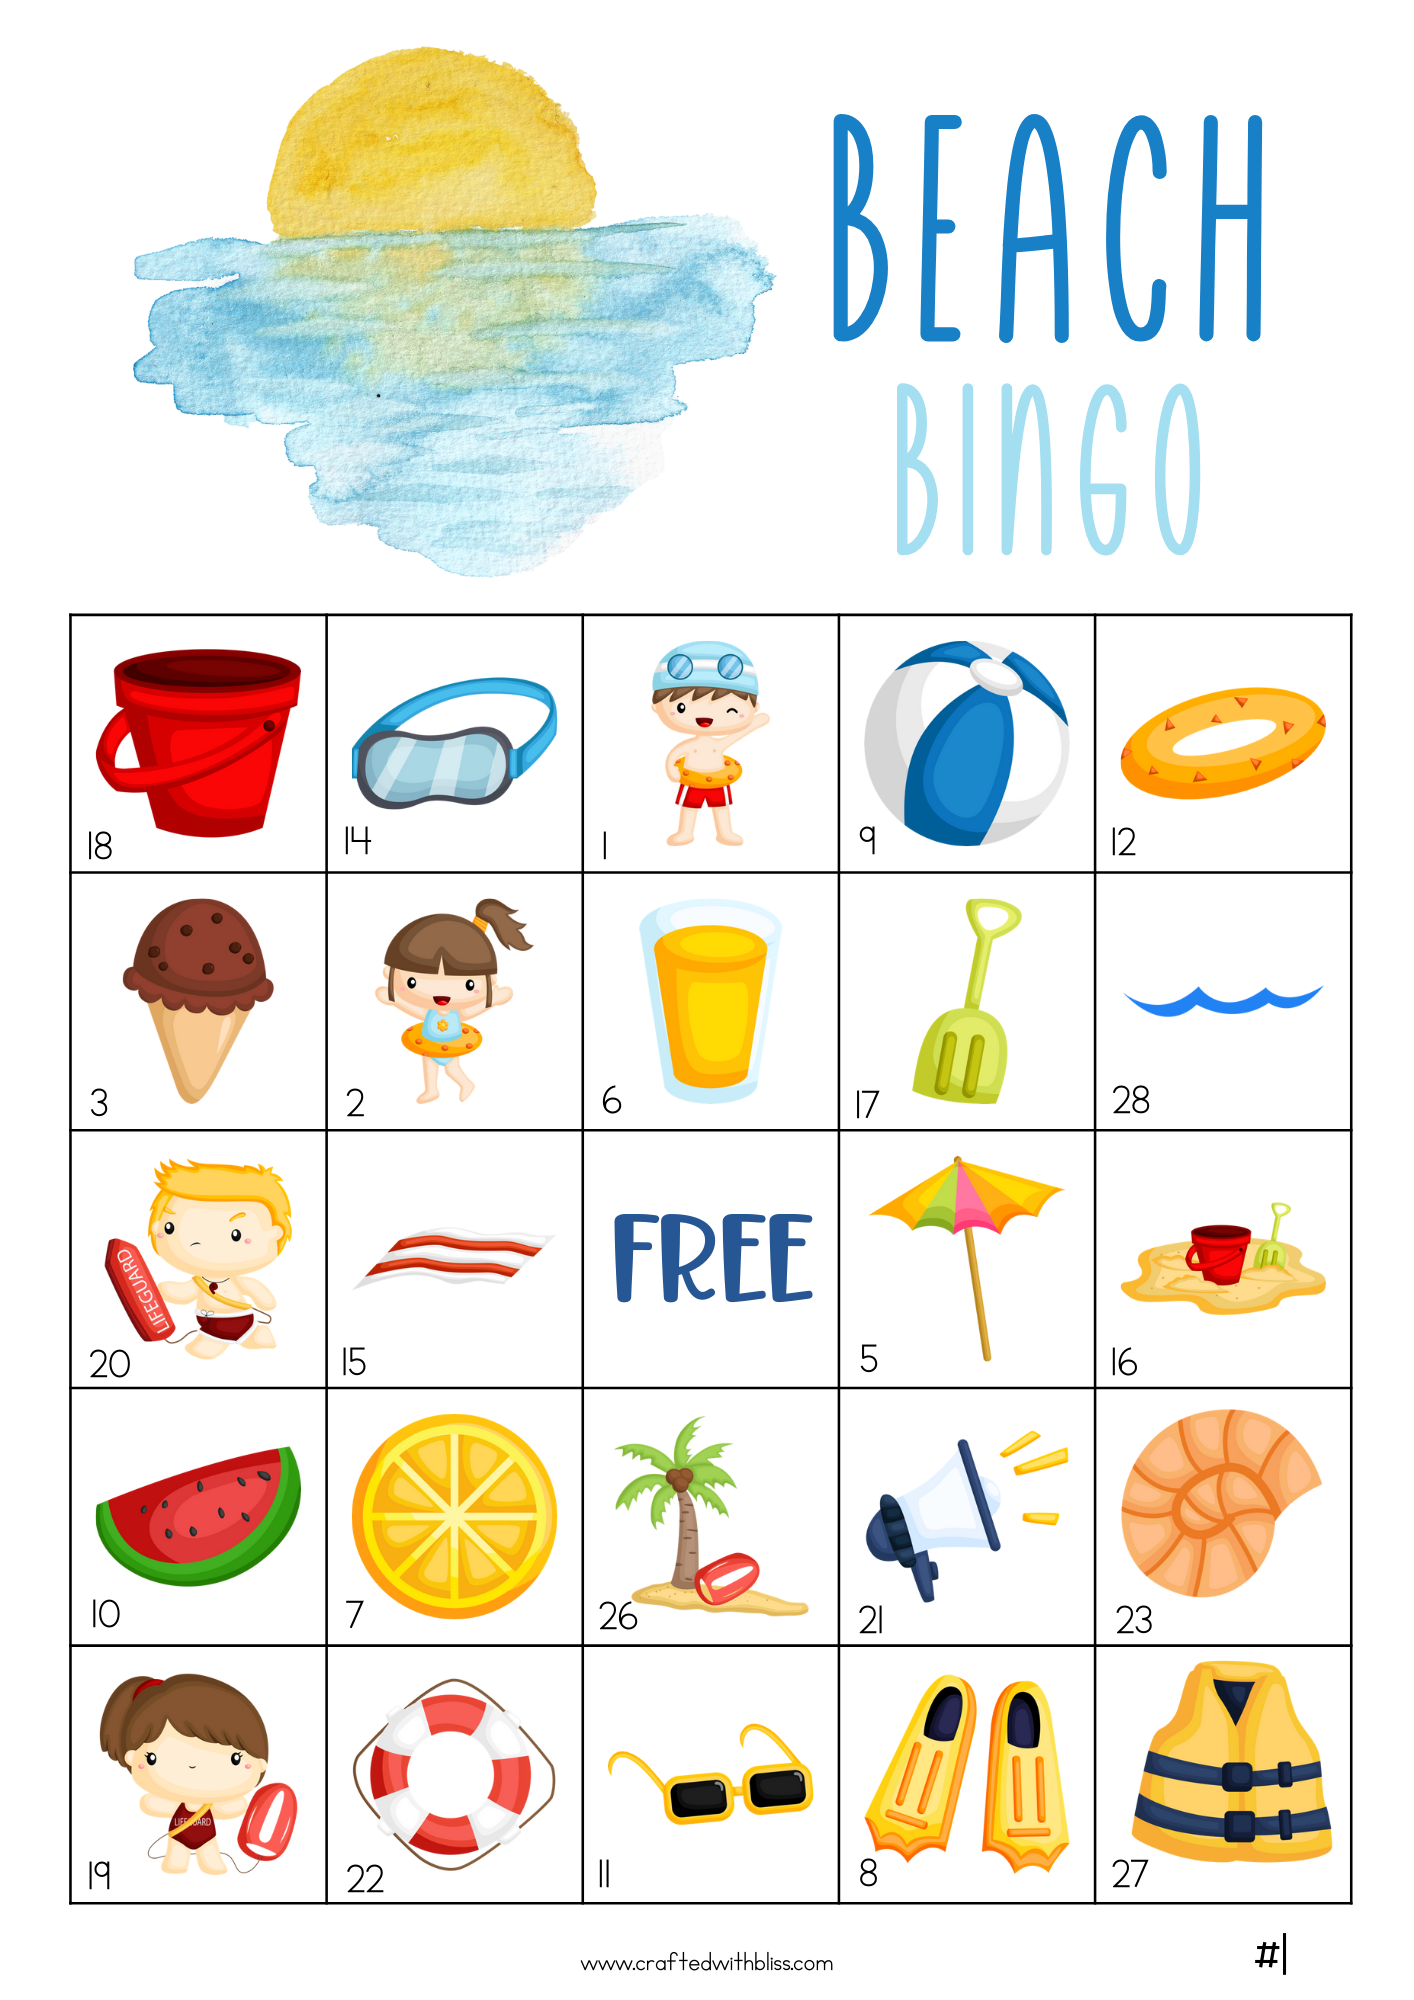 50 Beach Bingo Cards (5x5)